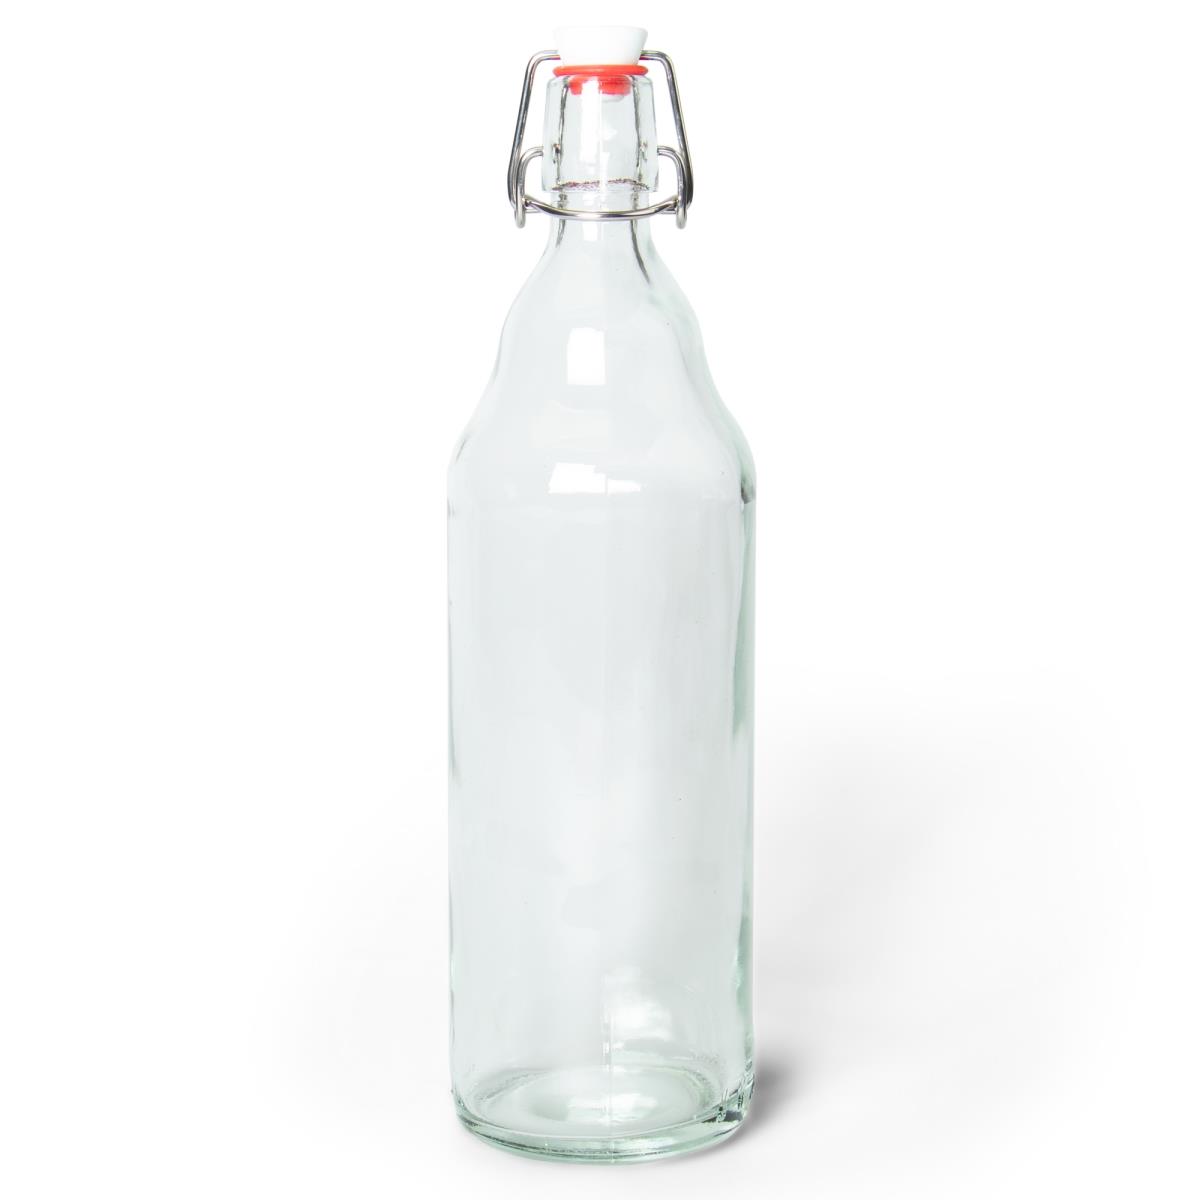 Kbot-006 33 Oz Clear Glass Bottles